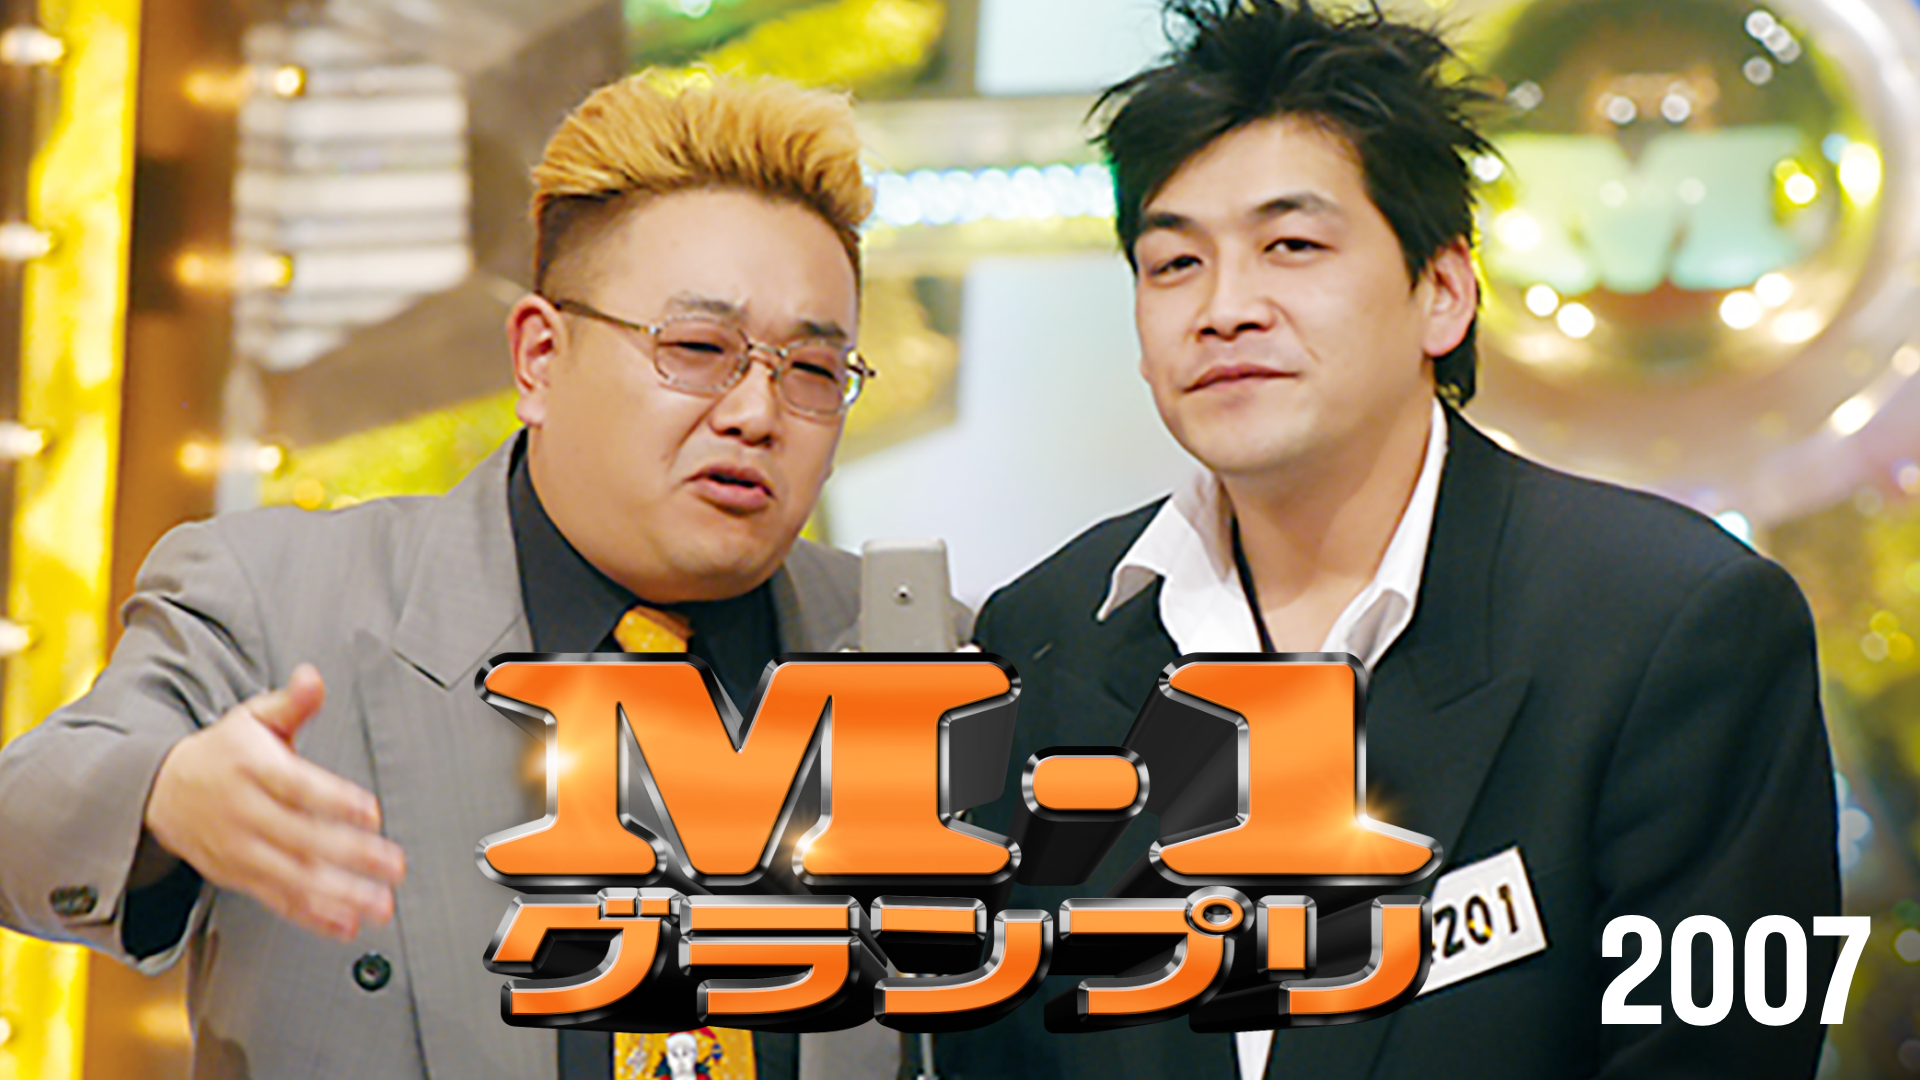 M-1グランプリ2007(TV番組・エンタメ / 2007)の動画視聴 | U-NEXT 31